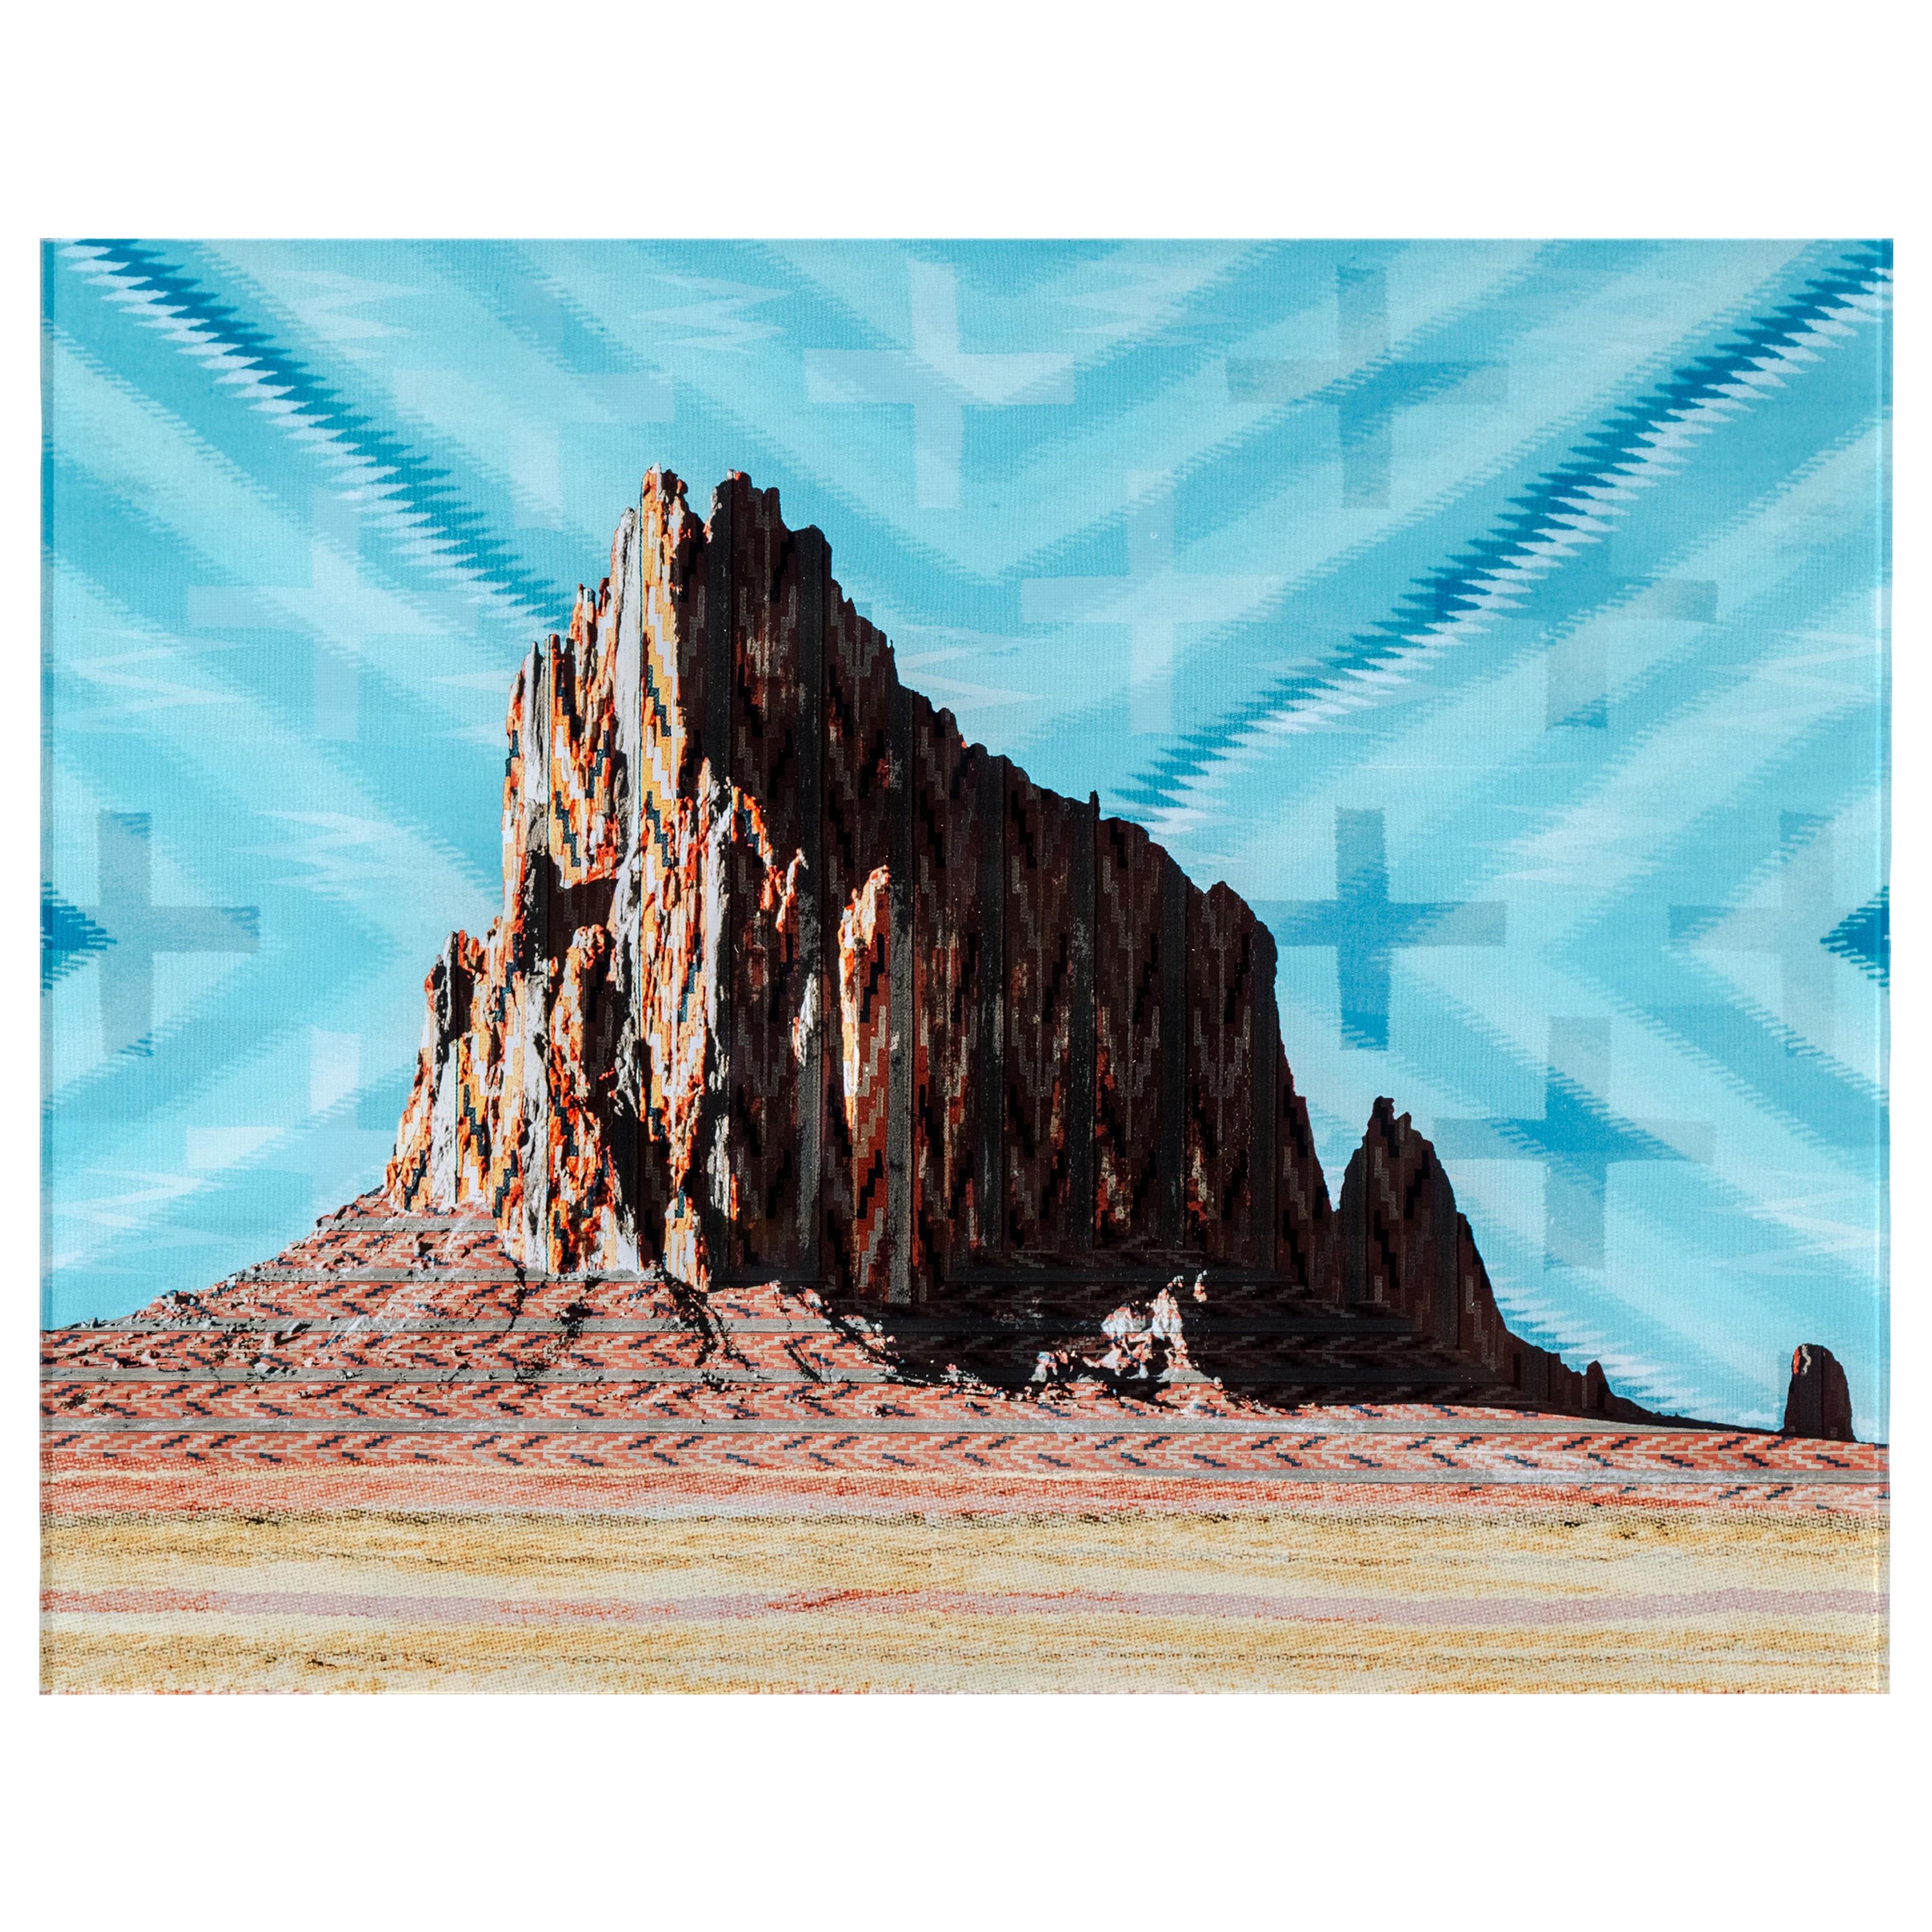 Woven Landscape: Shiprock - Mixed Media Art by Darby Raymond-Overstreet